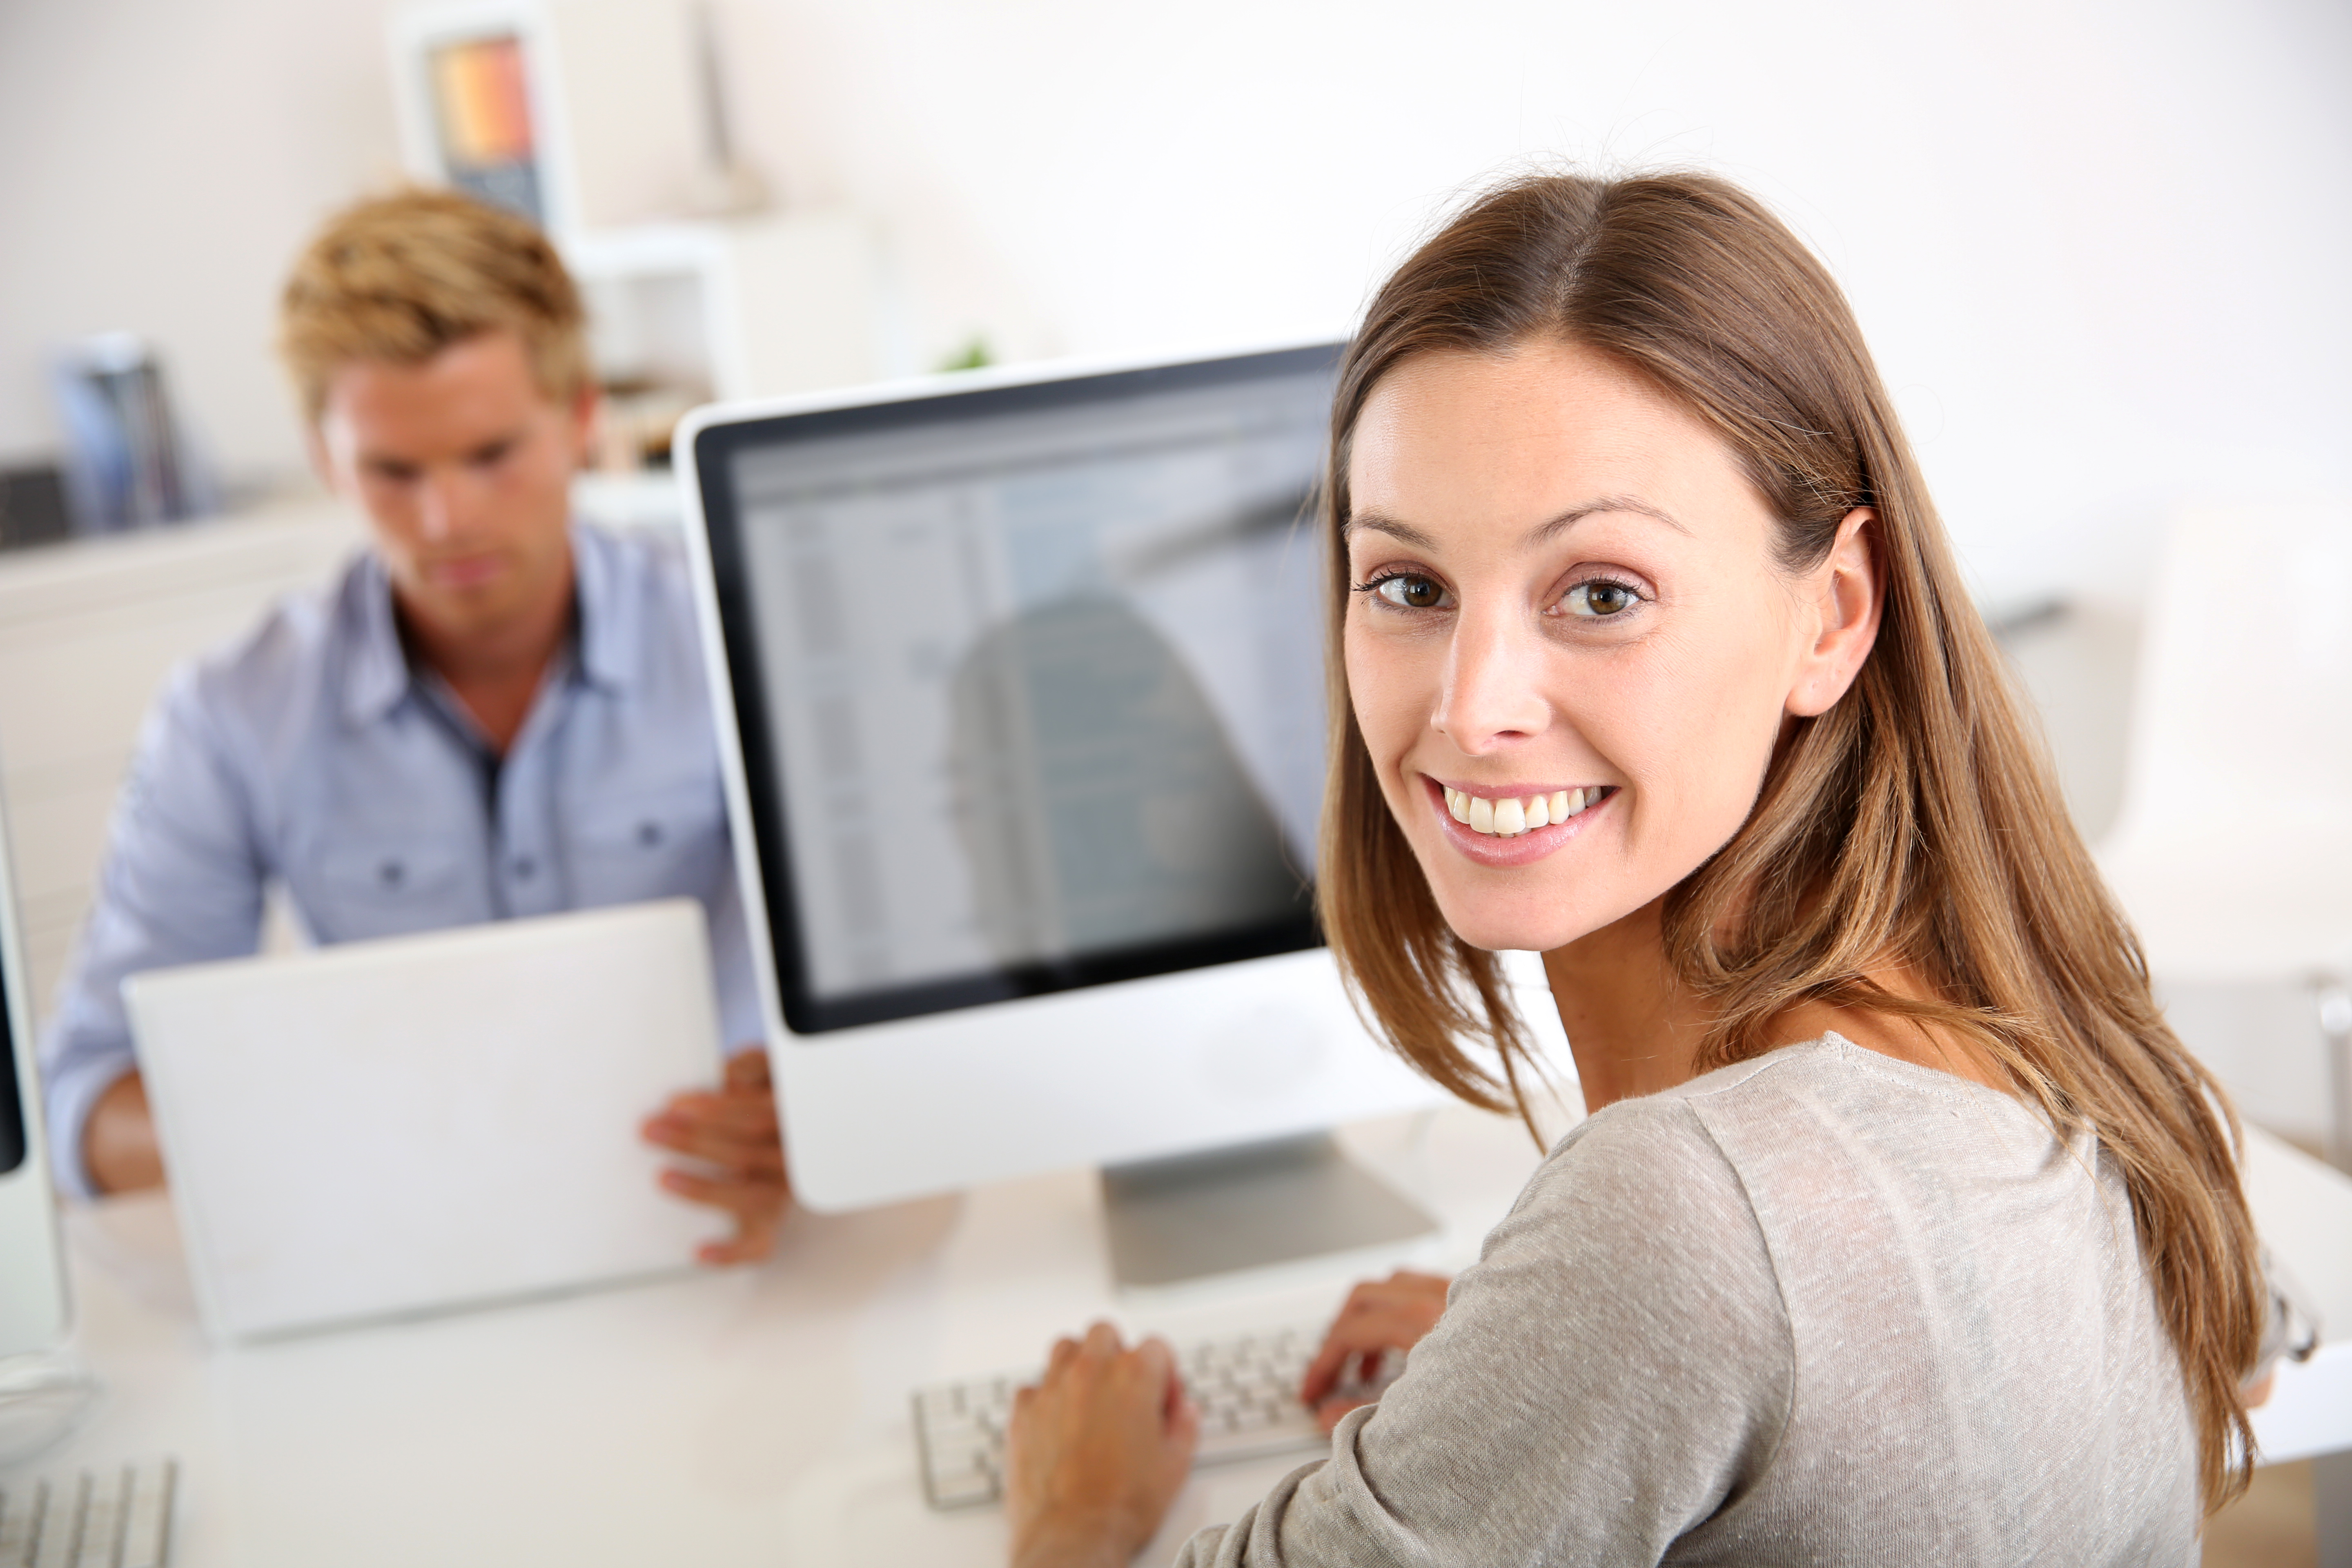 Portrait of smiling office worker in front of desktop